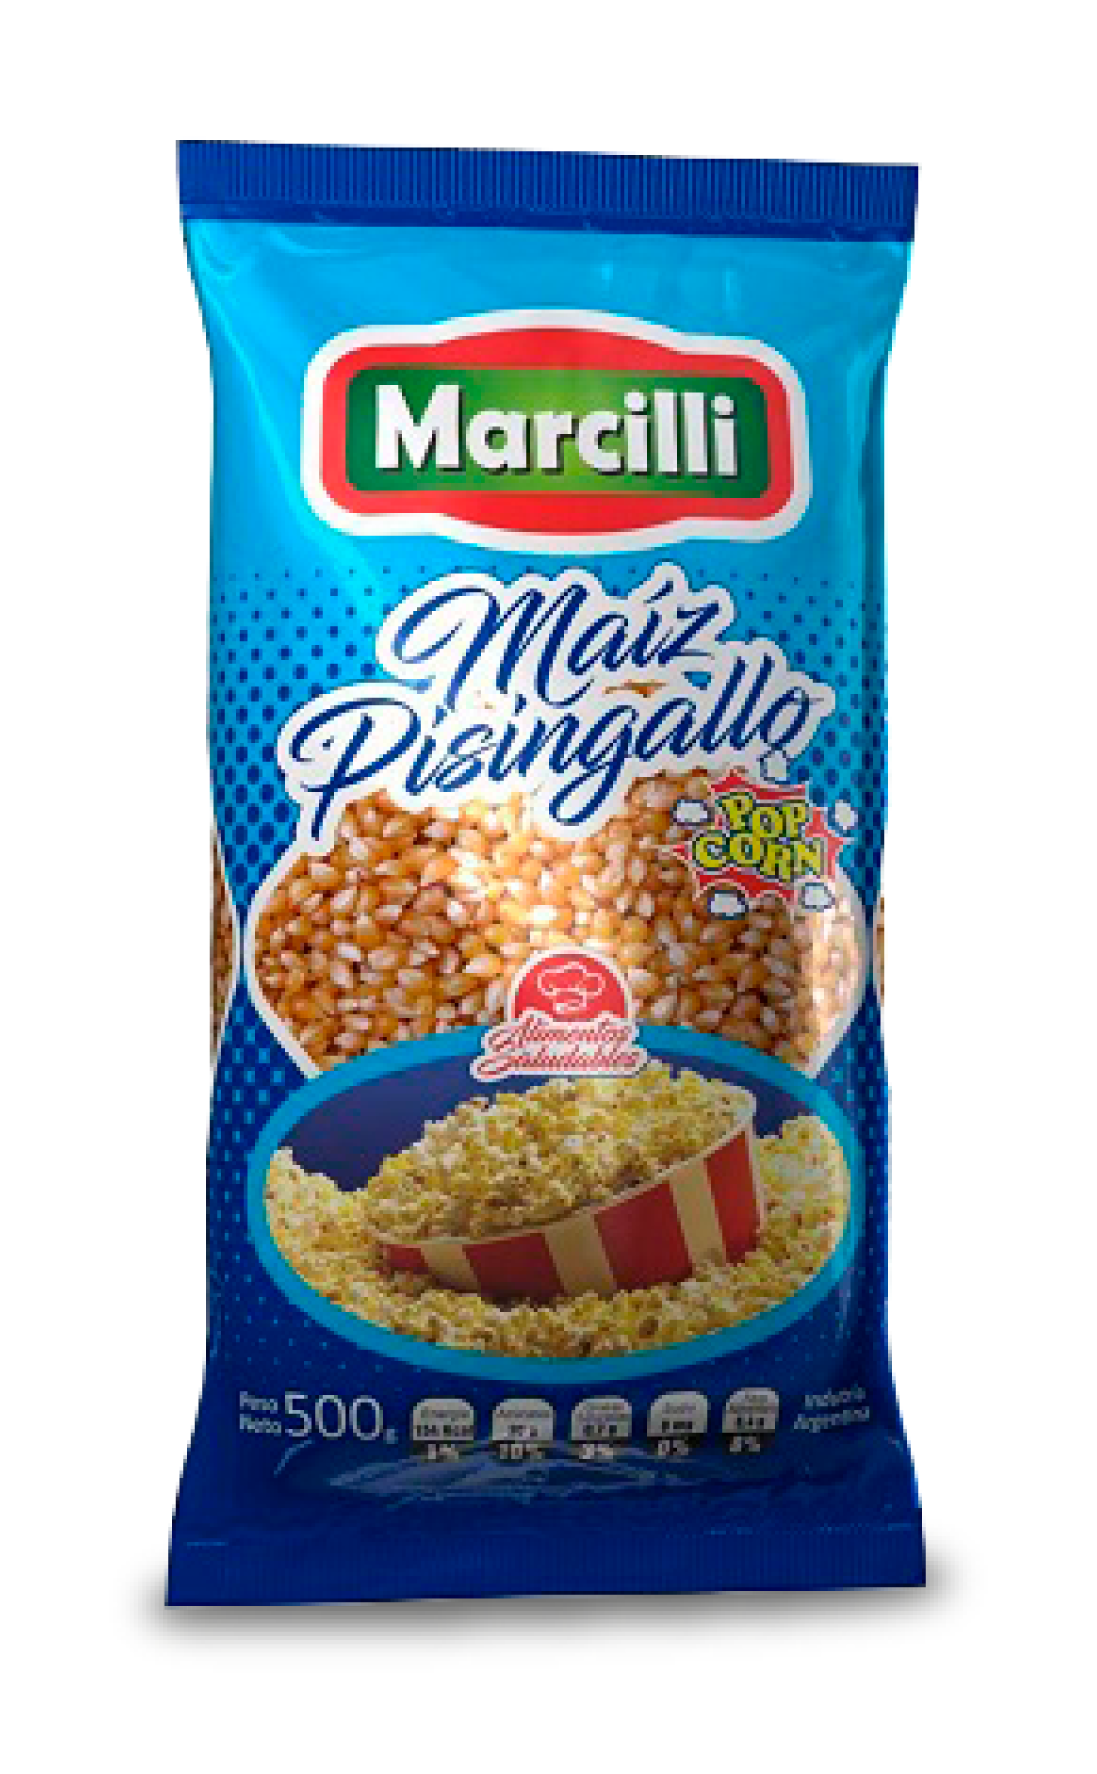 MARCILLI - Maiz Piscingallo 10 x 500 gr